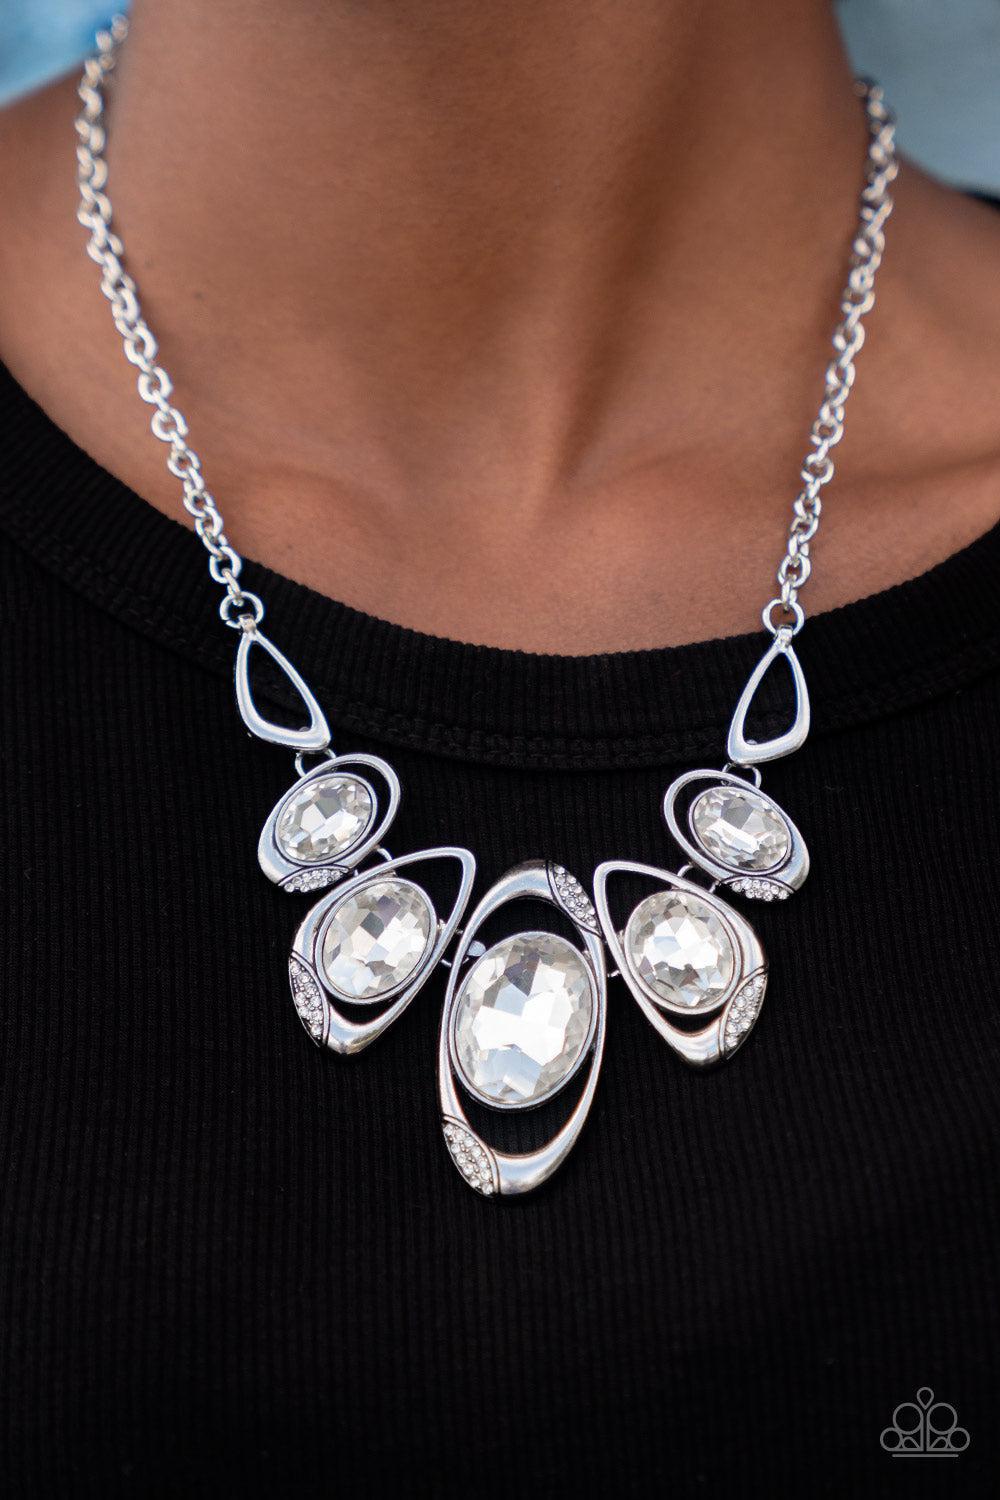 Hypnotic Twinkle White Rhinestone Necklace - Paparazzi Accessories-on model - CarasShop.com - $5 Jewelry by Cara Jewels